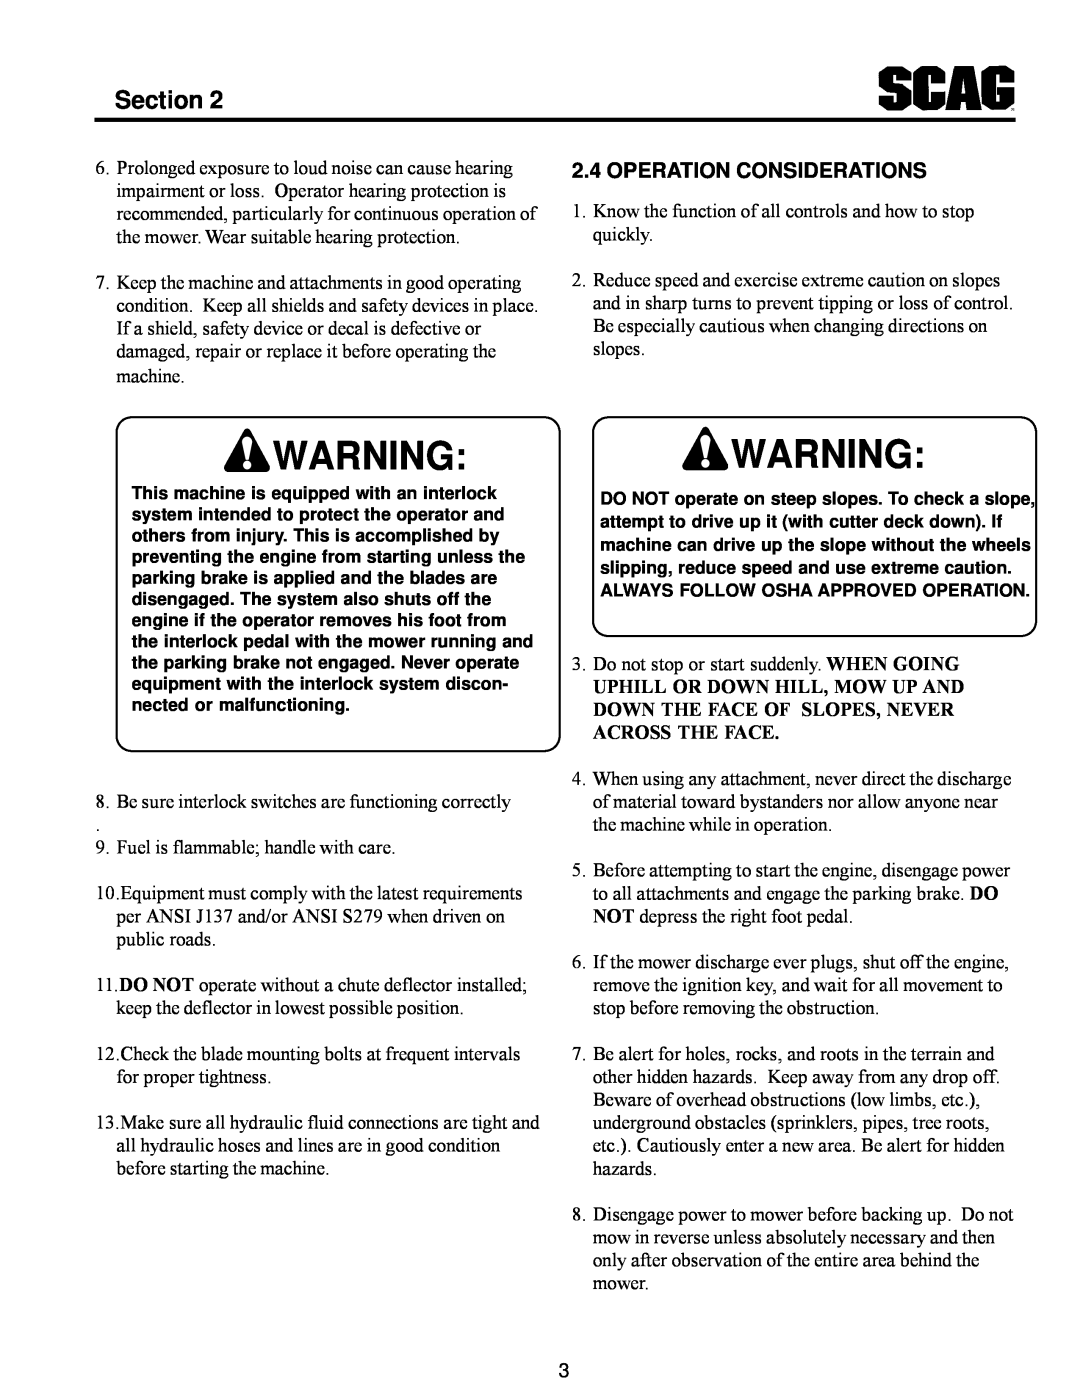 Scag Power Equipment MAG manual Operation Considerations, Warningwarning, Section 